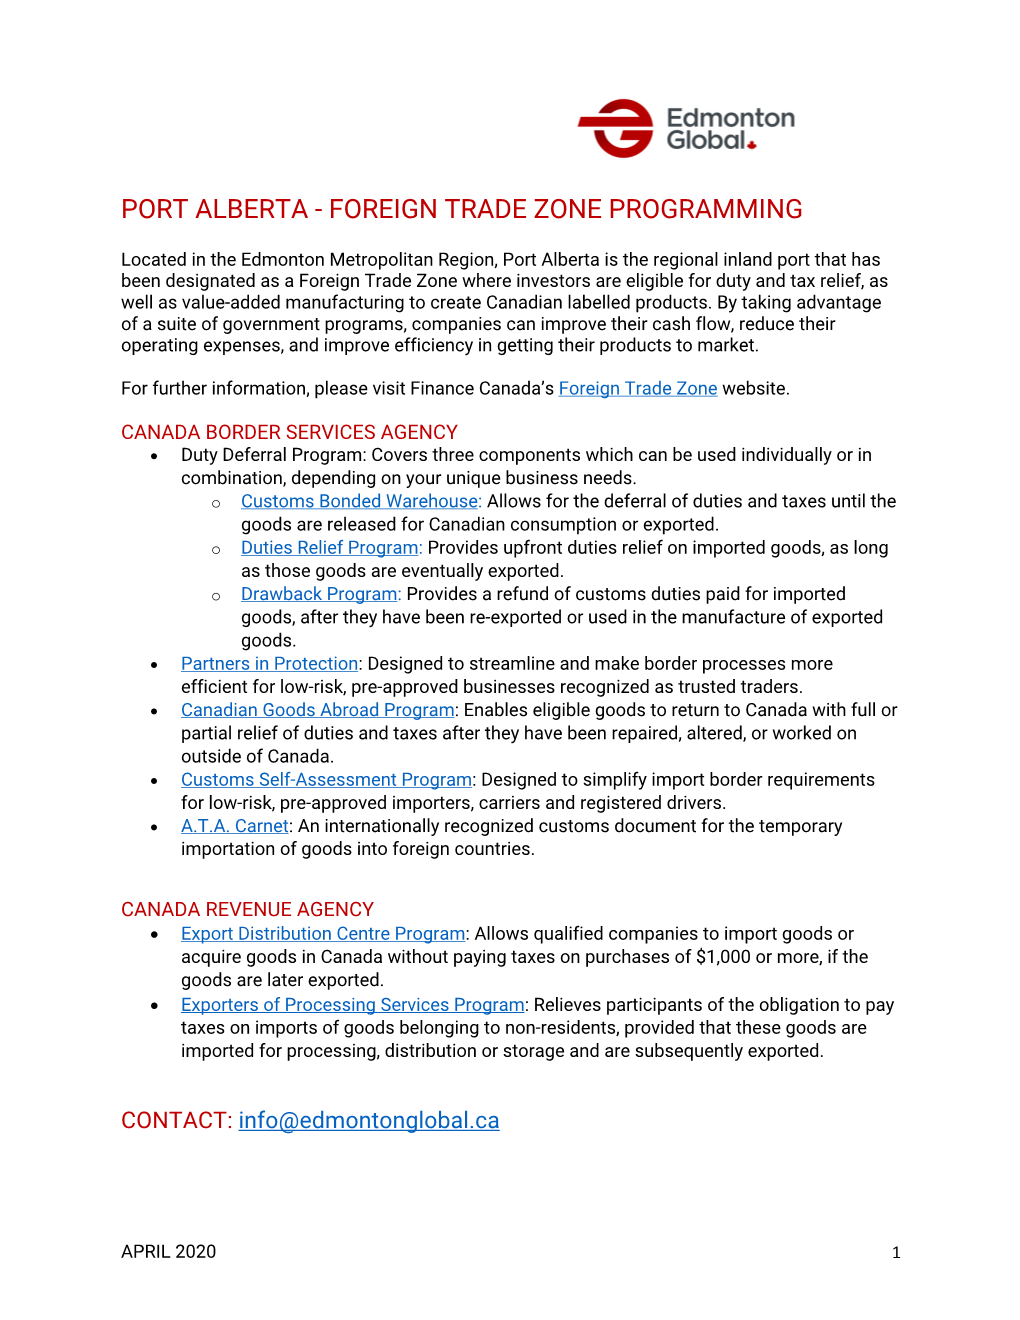 Port Alberta - Foreign Trade Zone Programming